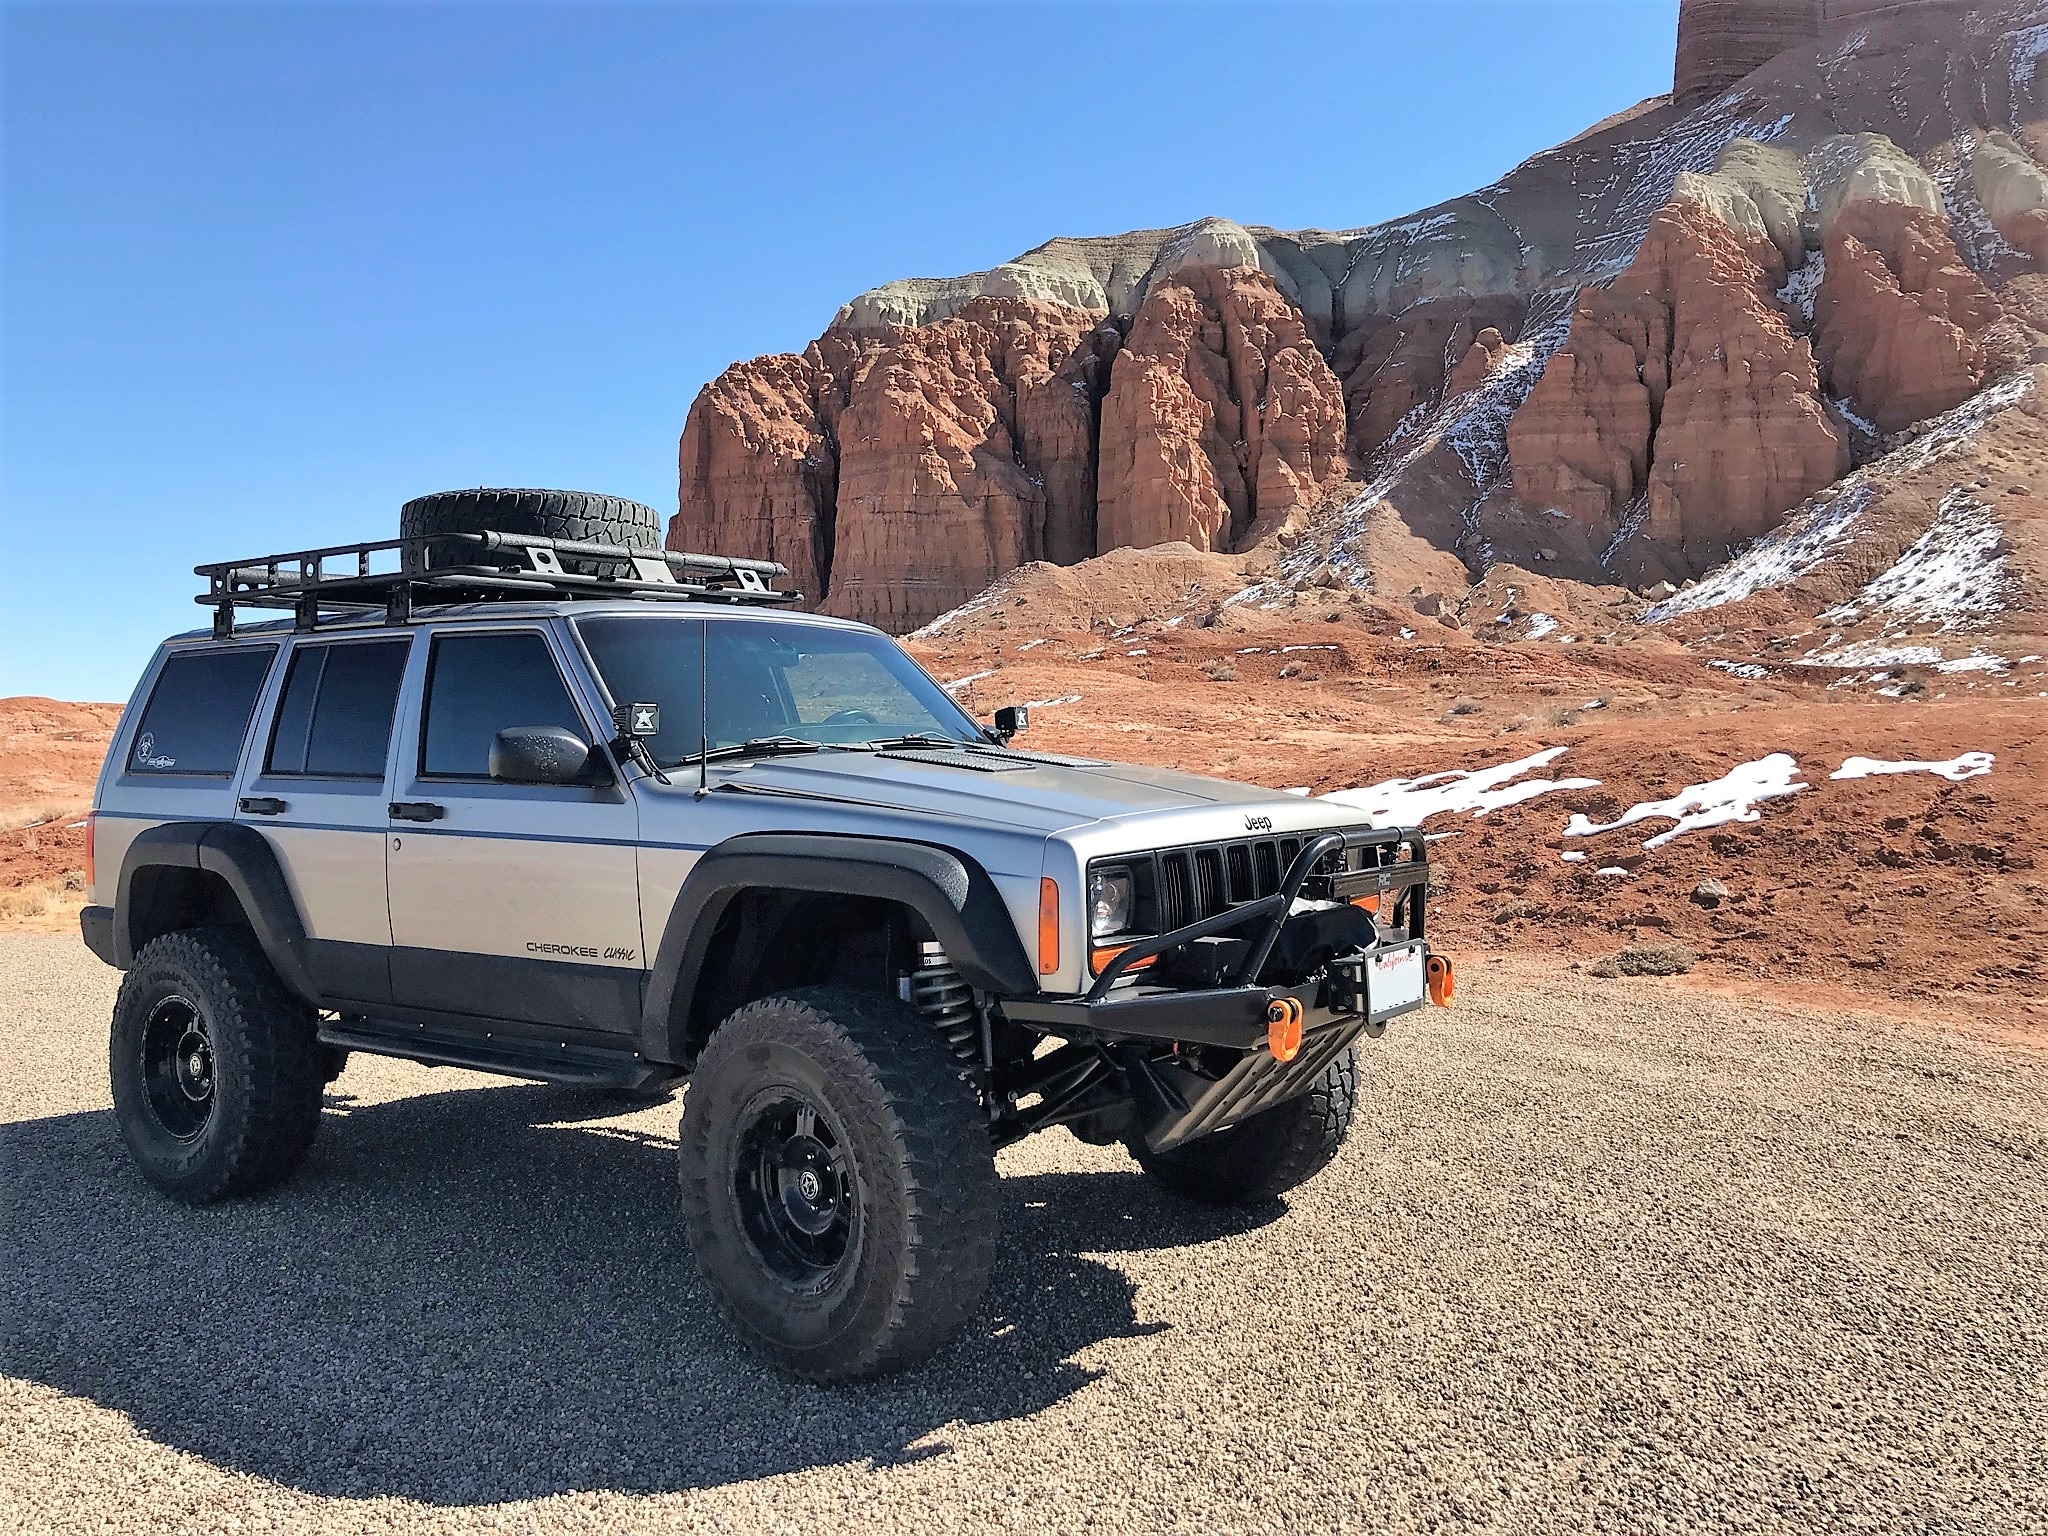 https://www.onallcylinders.com/wp-content/uploads/2023/04/06/jeep-cherokee-xj-off-roading-on-a-desert-trail.jpeg